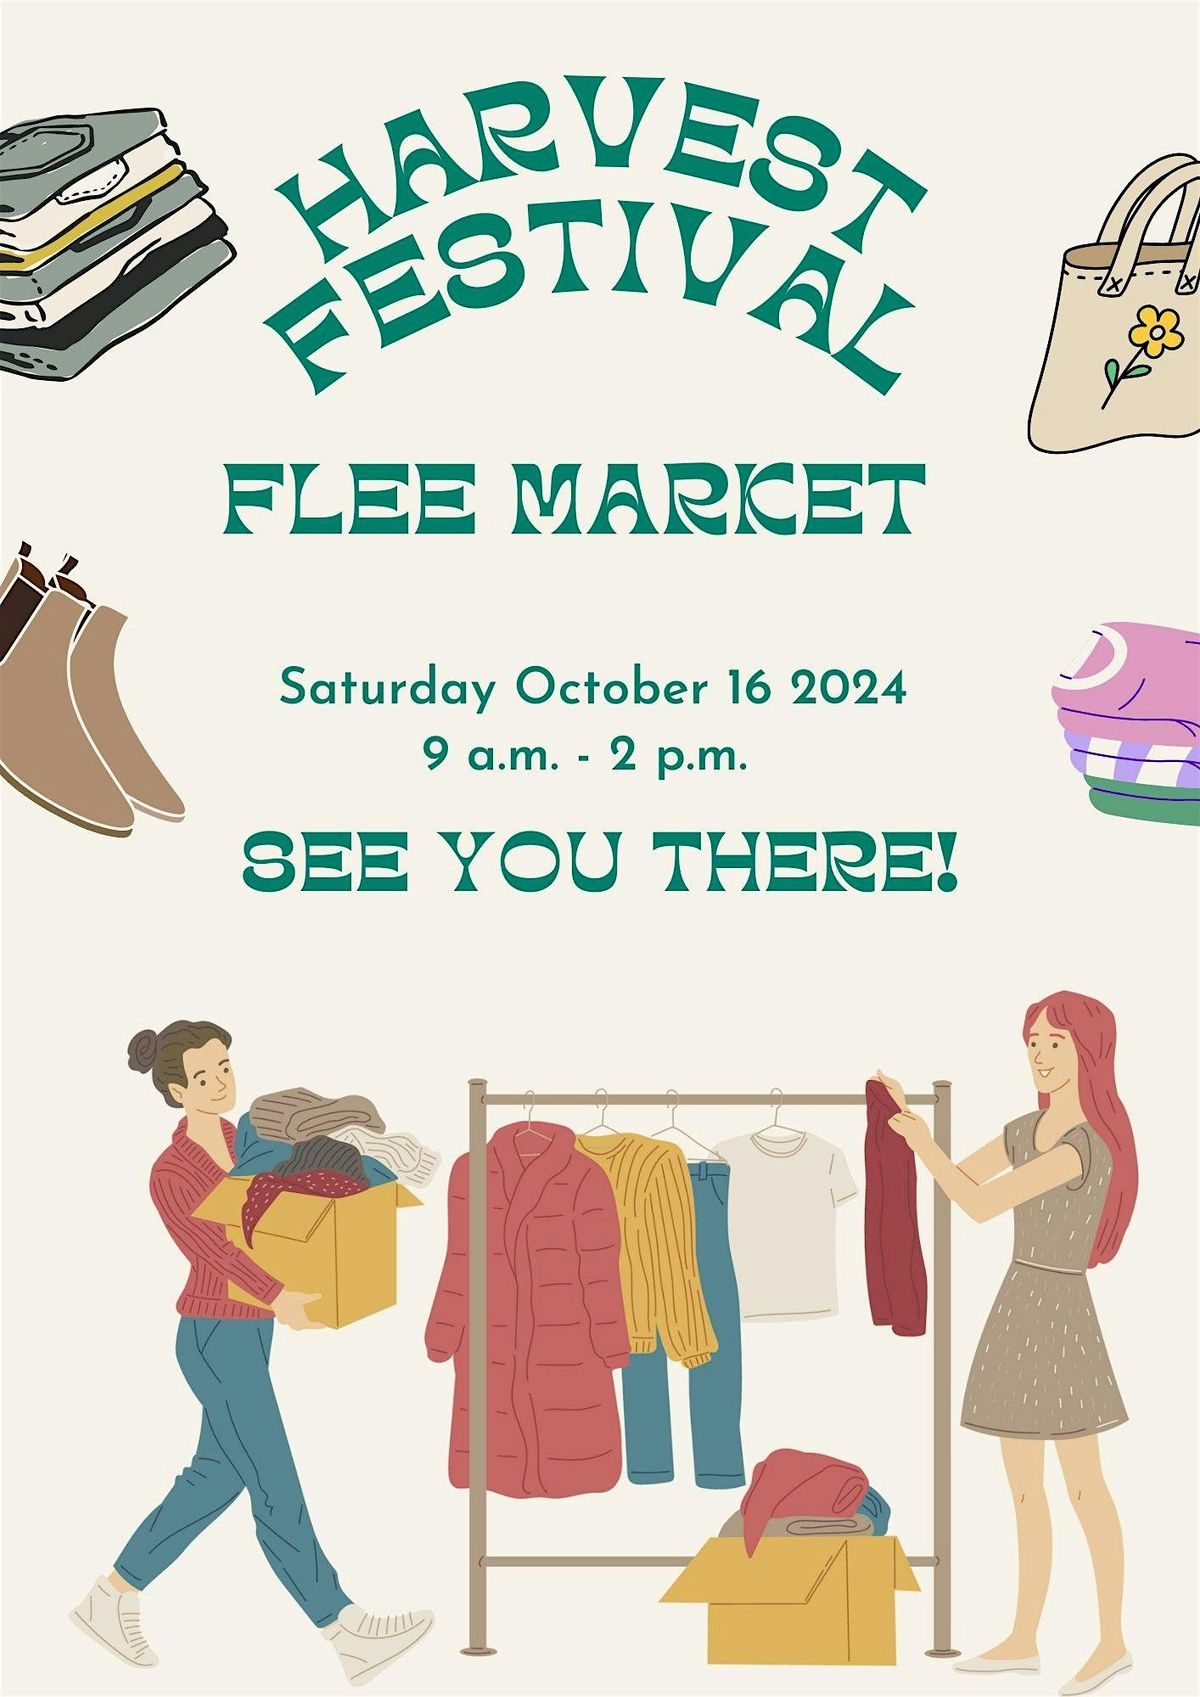 Harvest Festival Flea Market - Jewelry, Fashions, Food & More